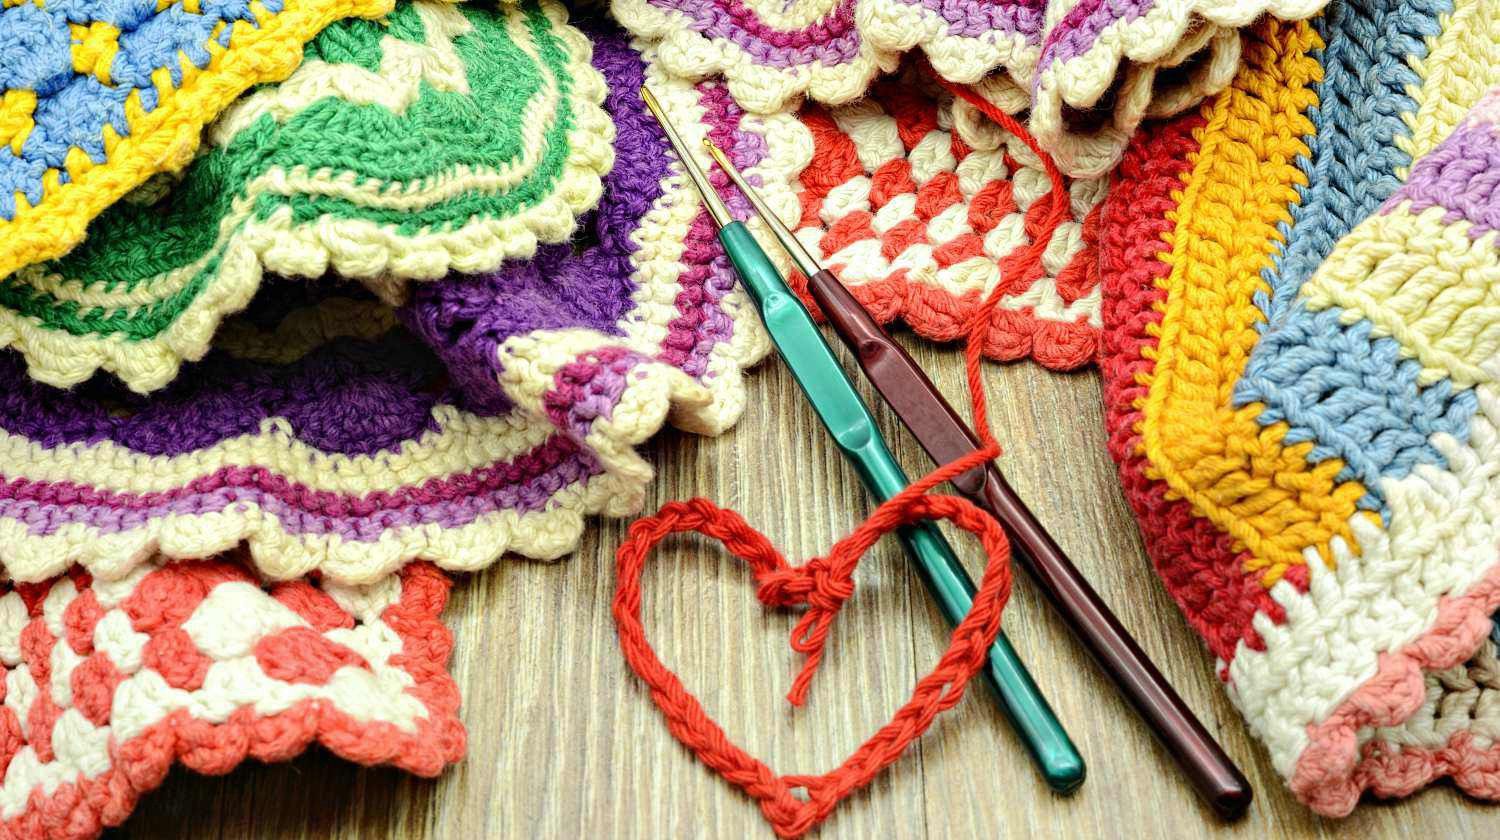 AmyFields Crochet2021